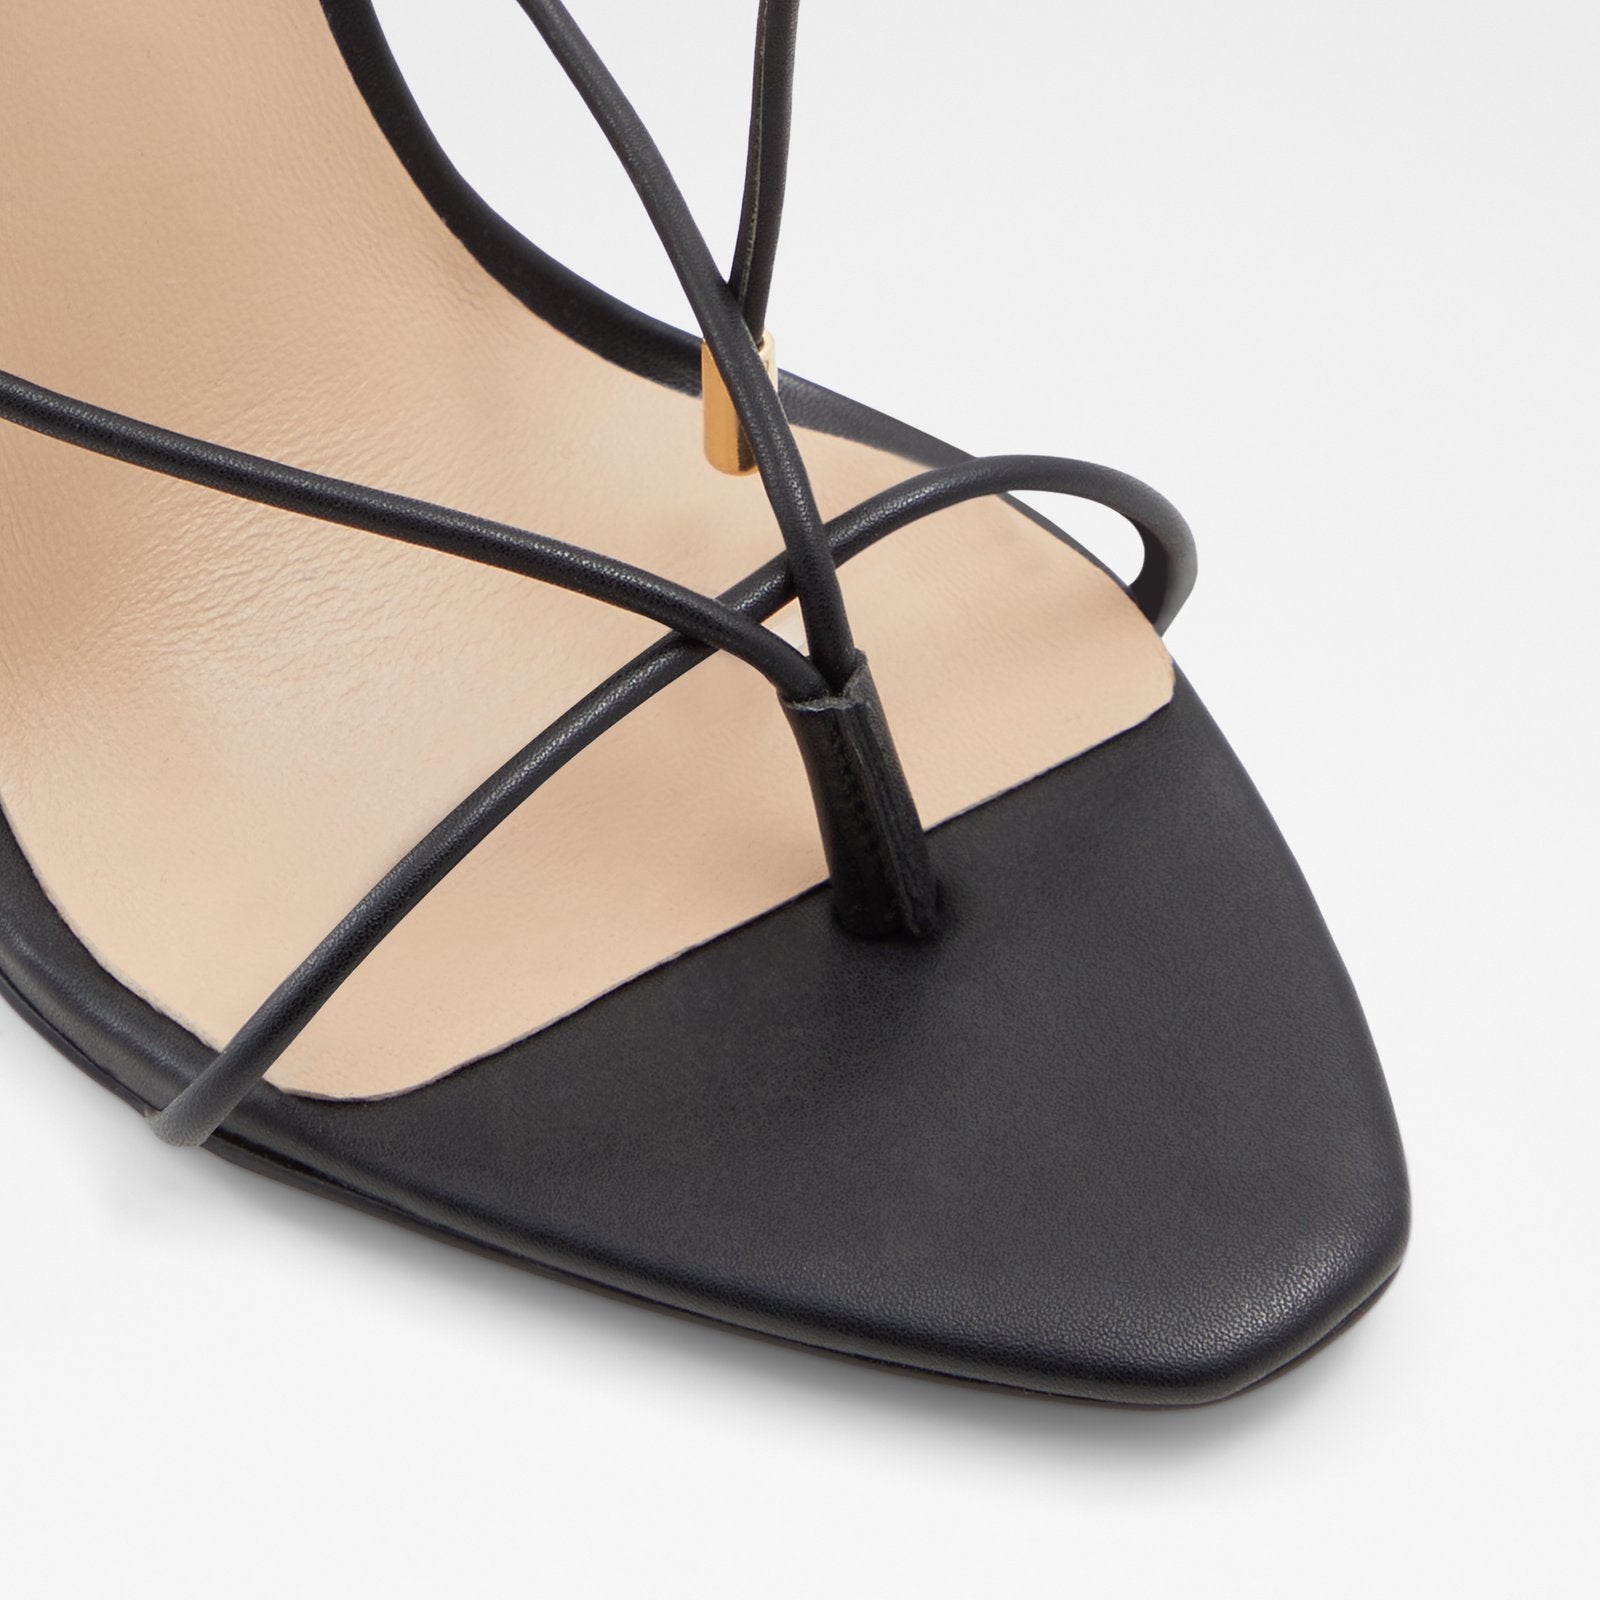 Glaosa / Heeled Sandals Women Shoes - Black - ALDO KSA